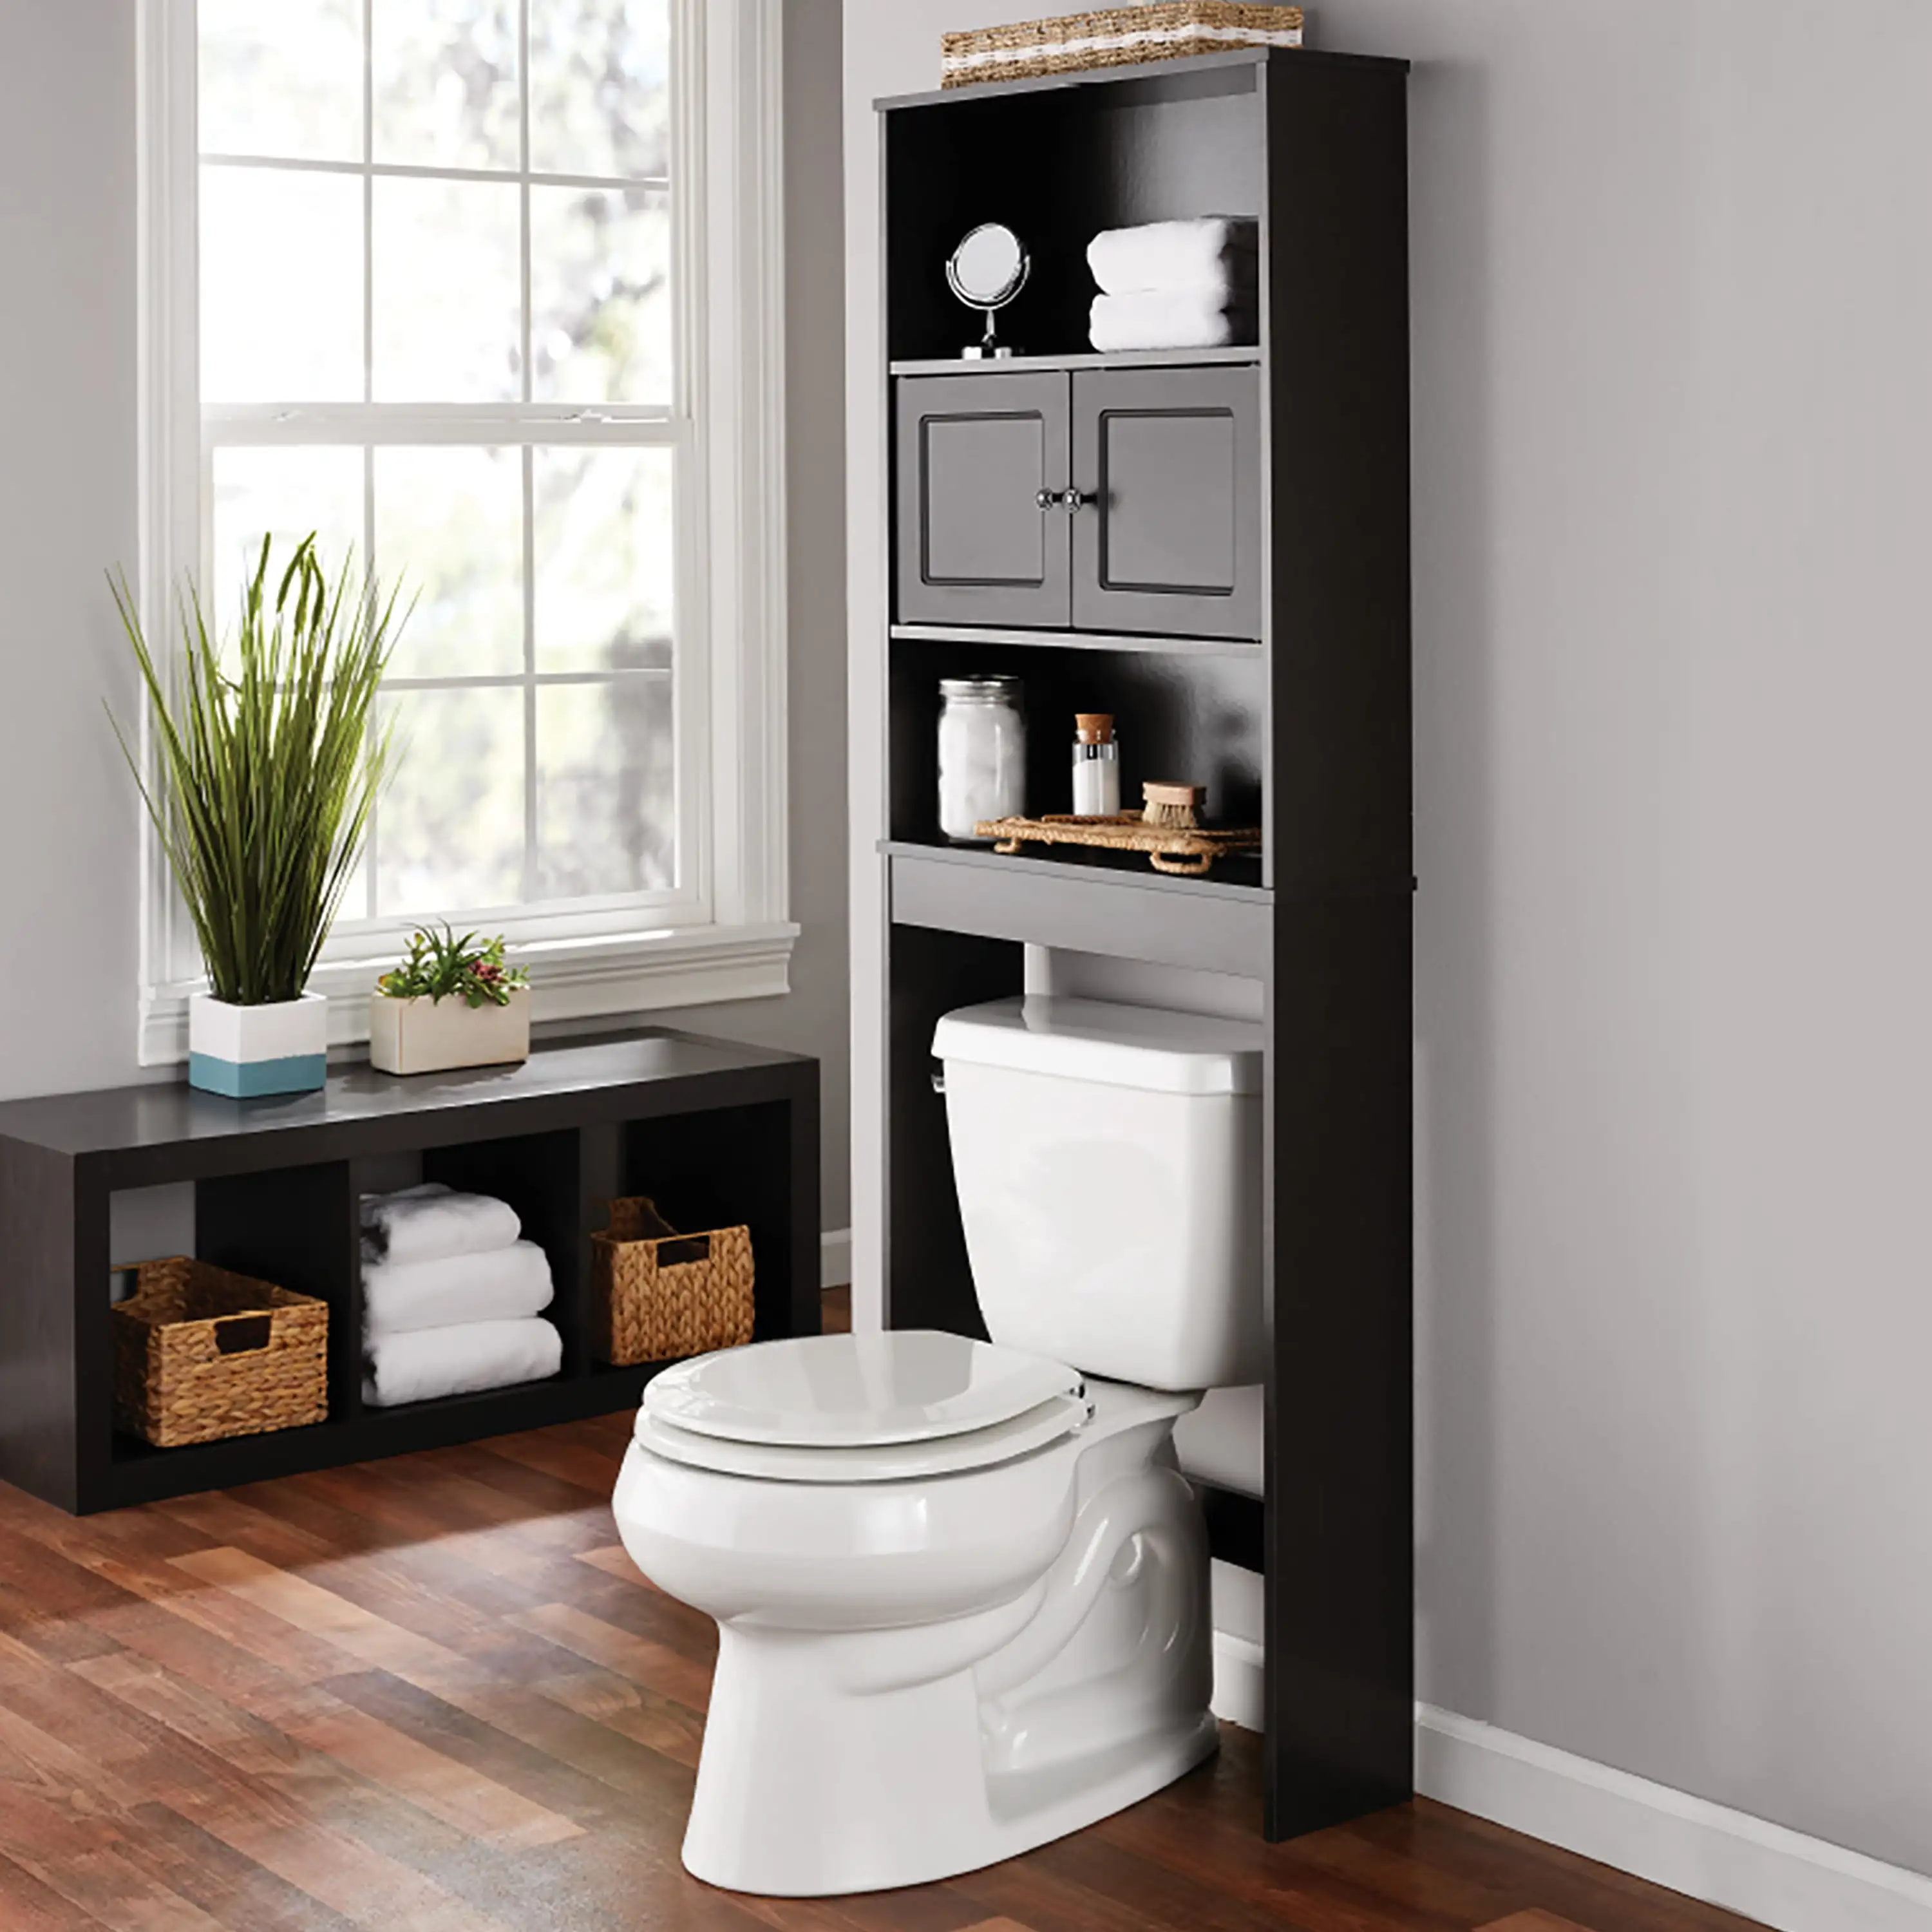 https://ae01.alicdn.com/kf/Sacd6e5542b0e41ff96922d8e2c0f6425a/23-W-Bathroom-Space-Saver-3-Shelves-over-the-Toilet-Cabinet.jpg